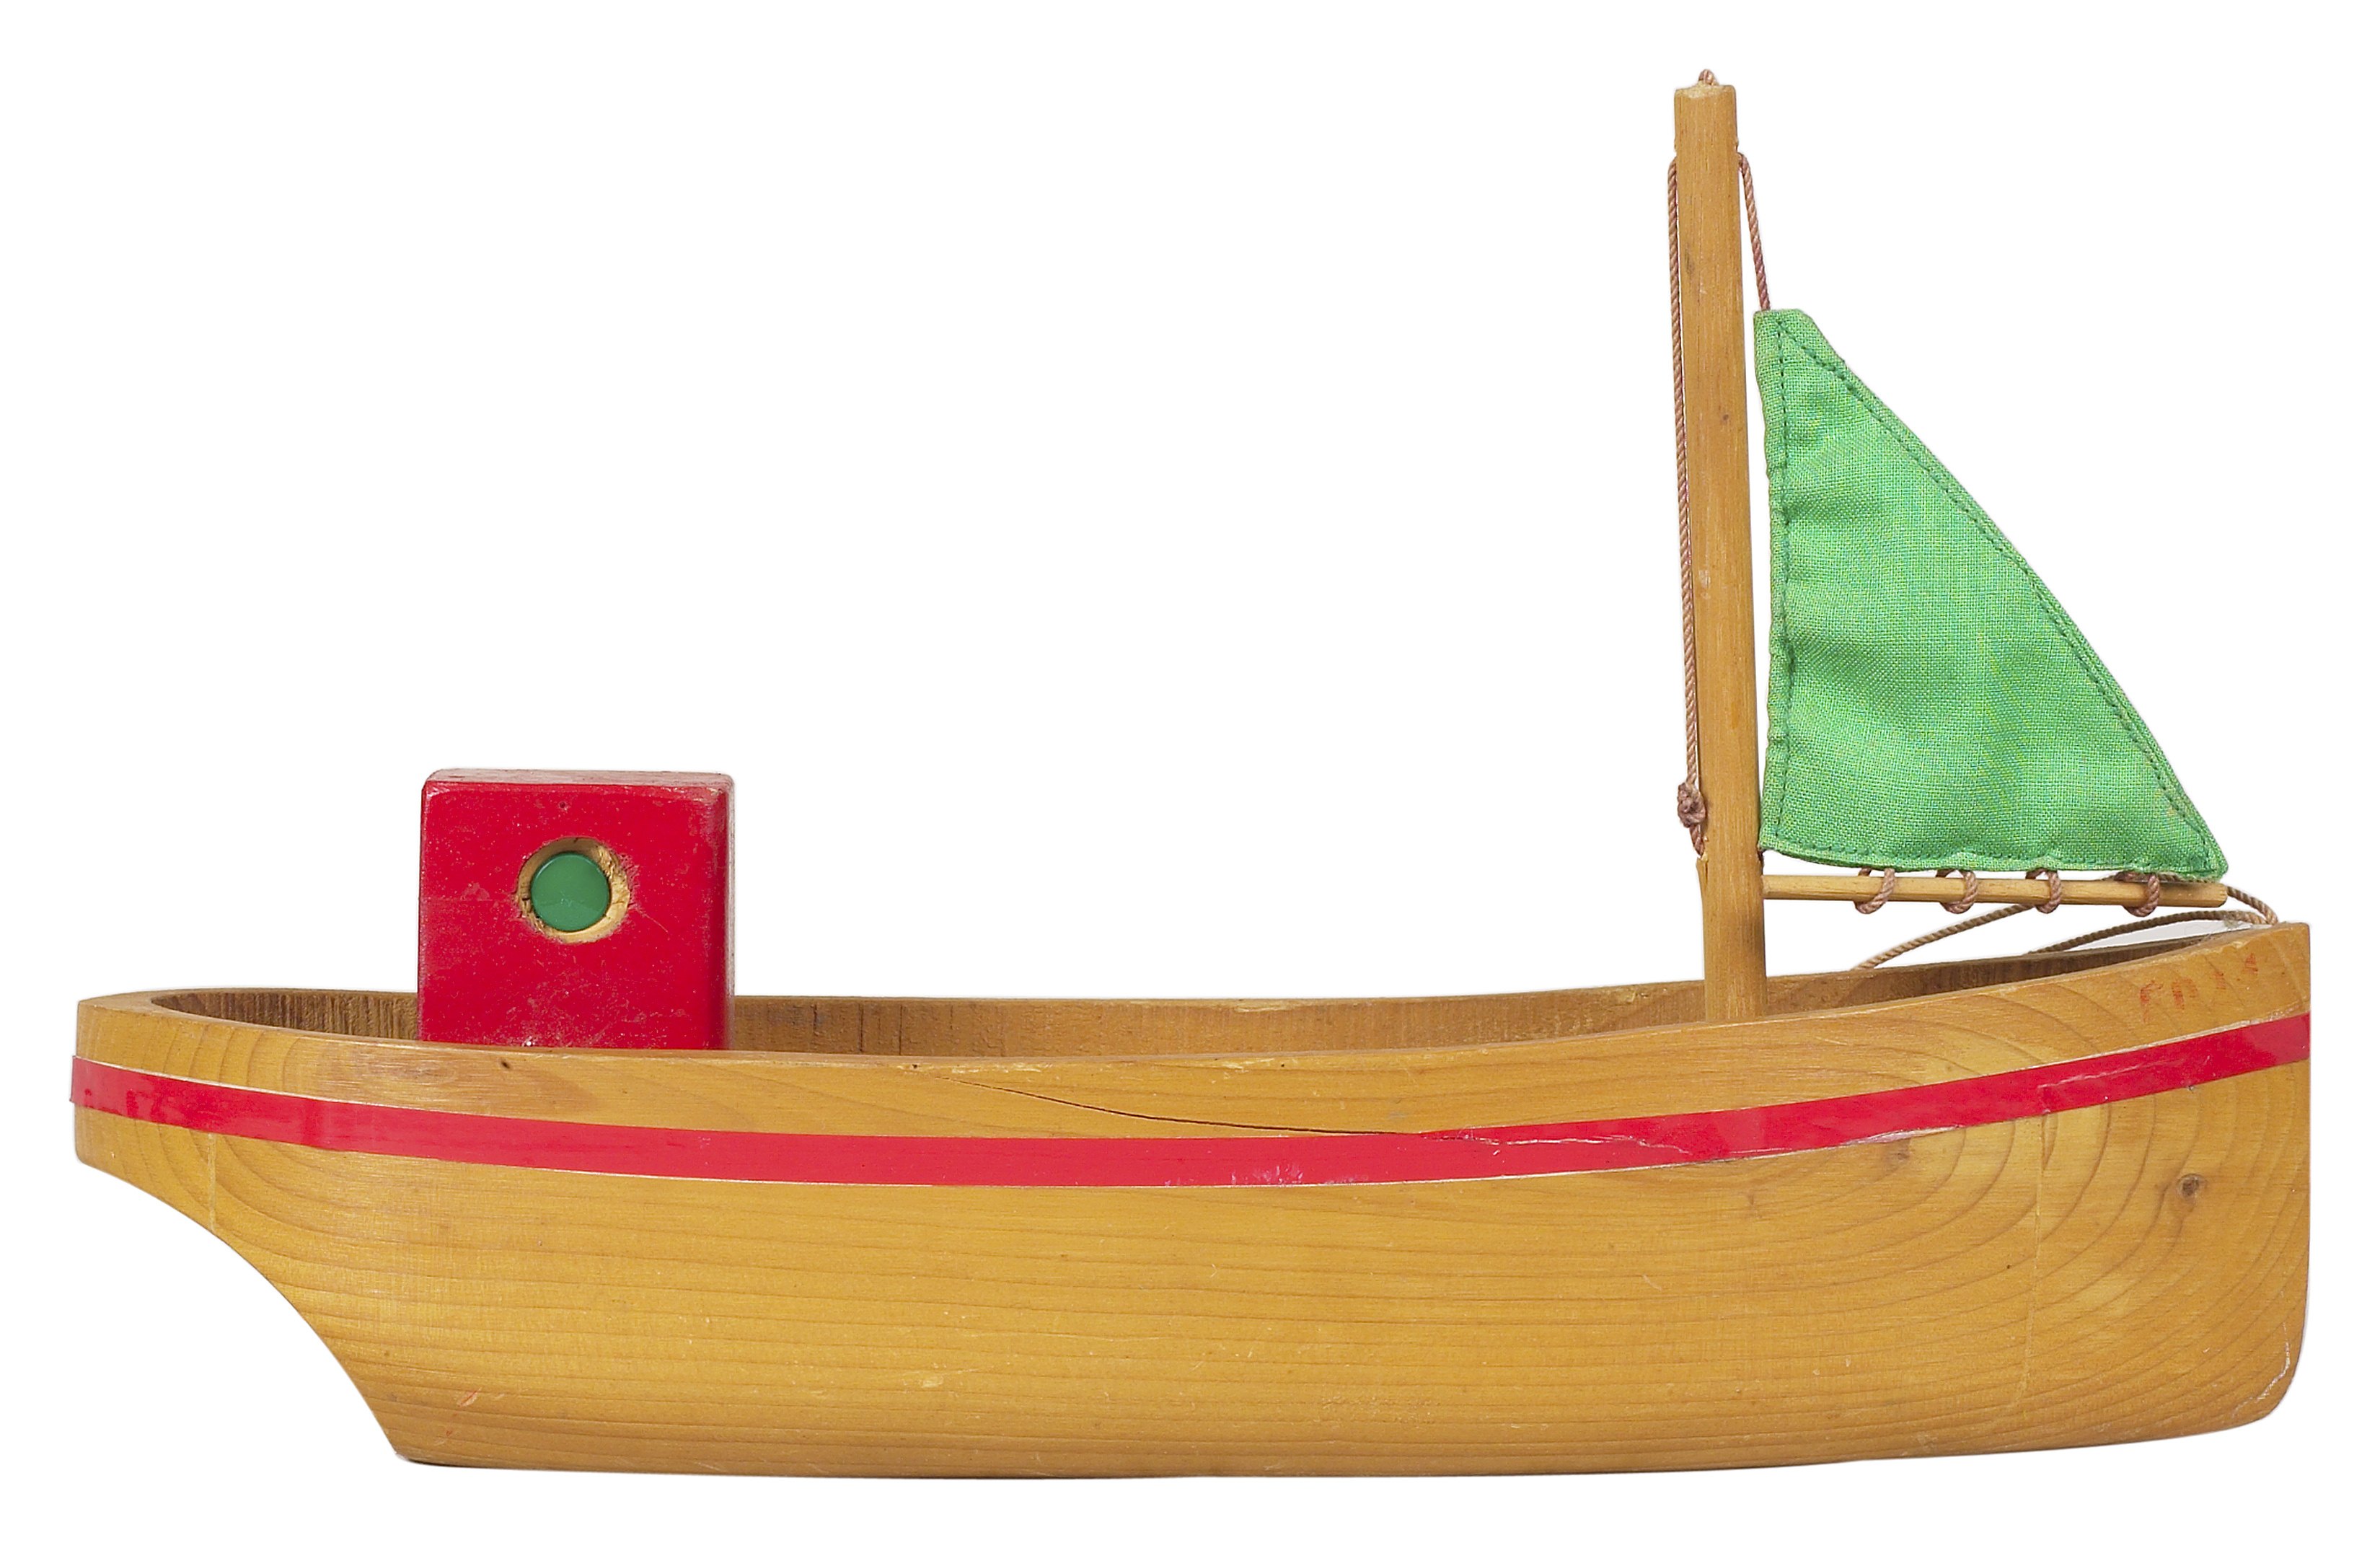 yawl - wooden model boat kits seaworthy small ships